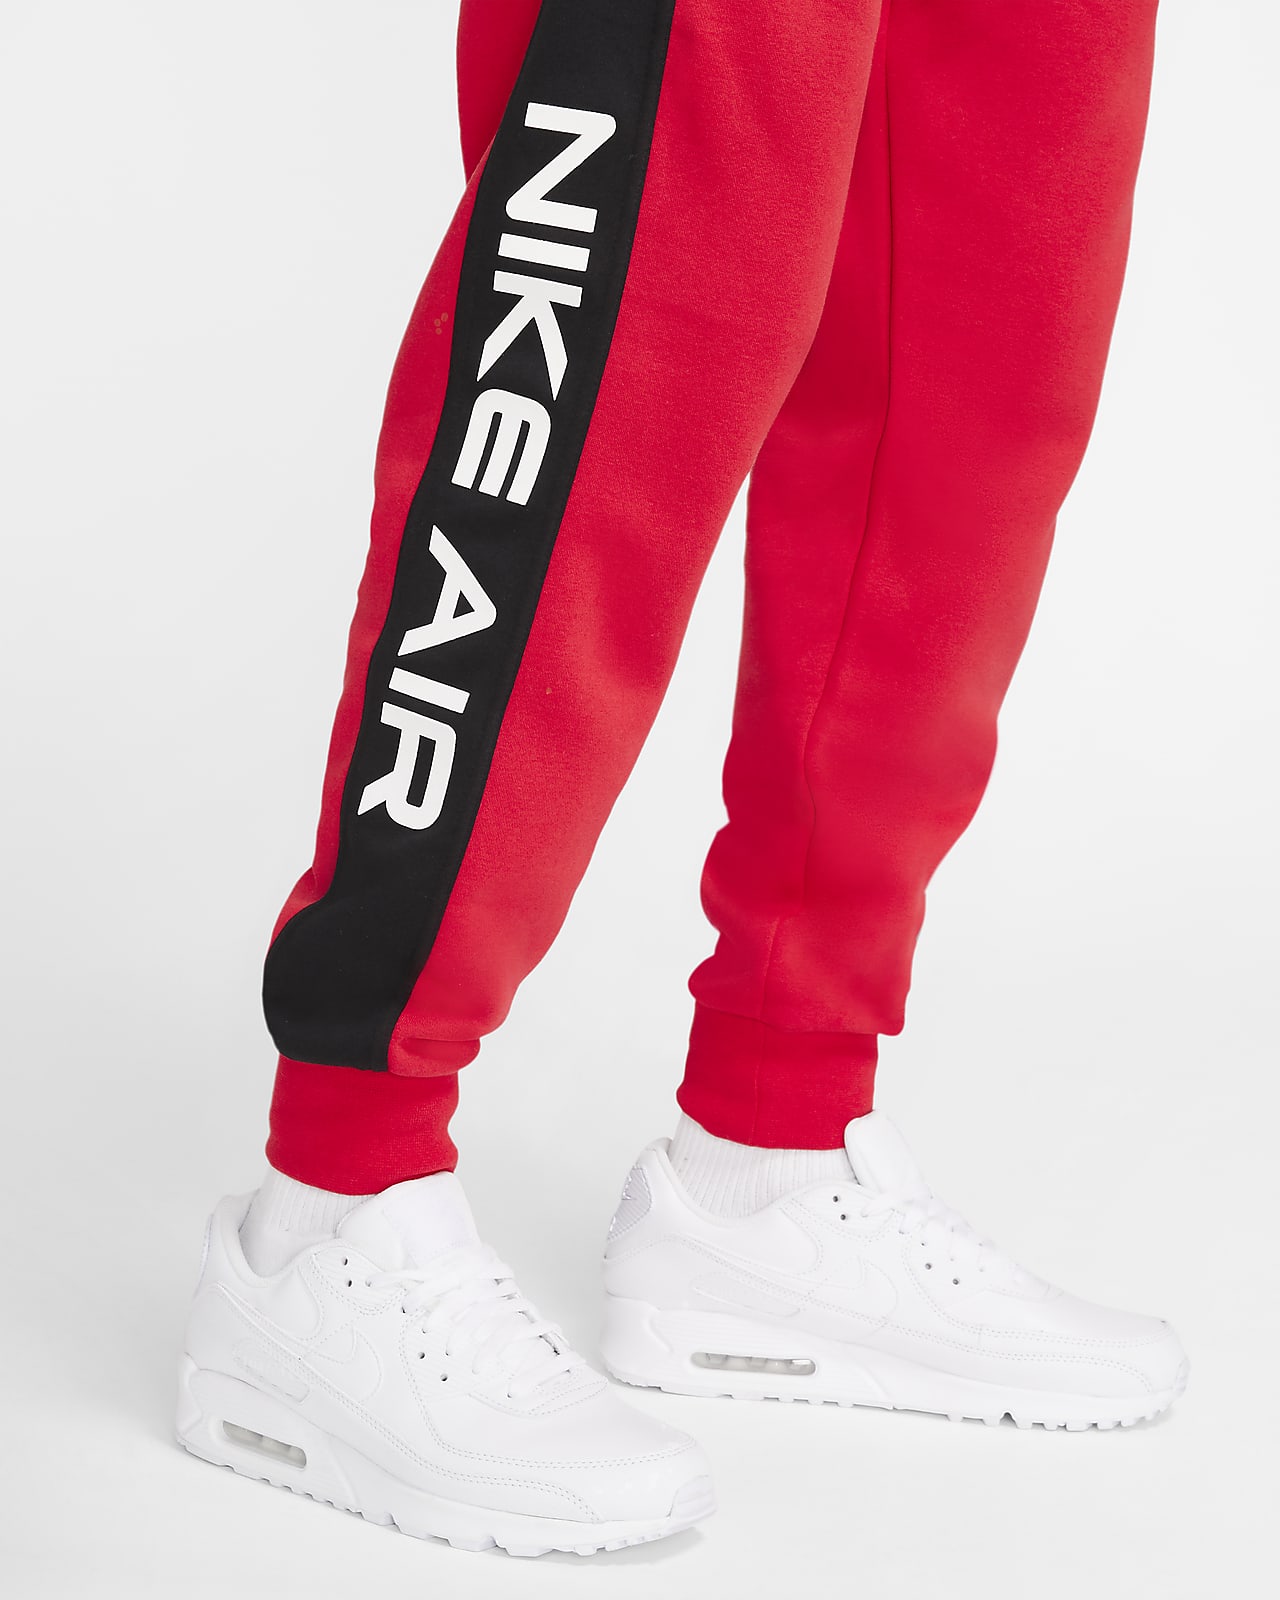 men's nike air premium fleece jogger pants